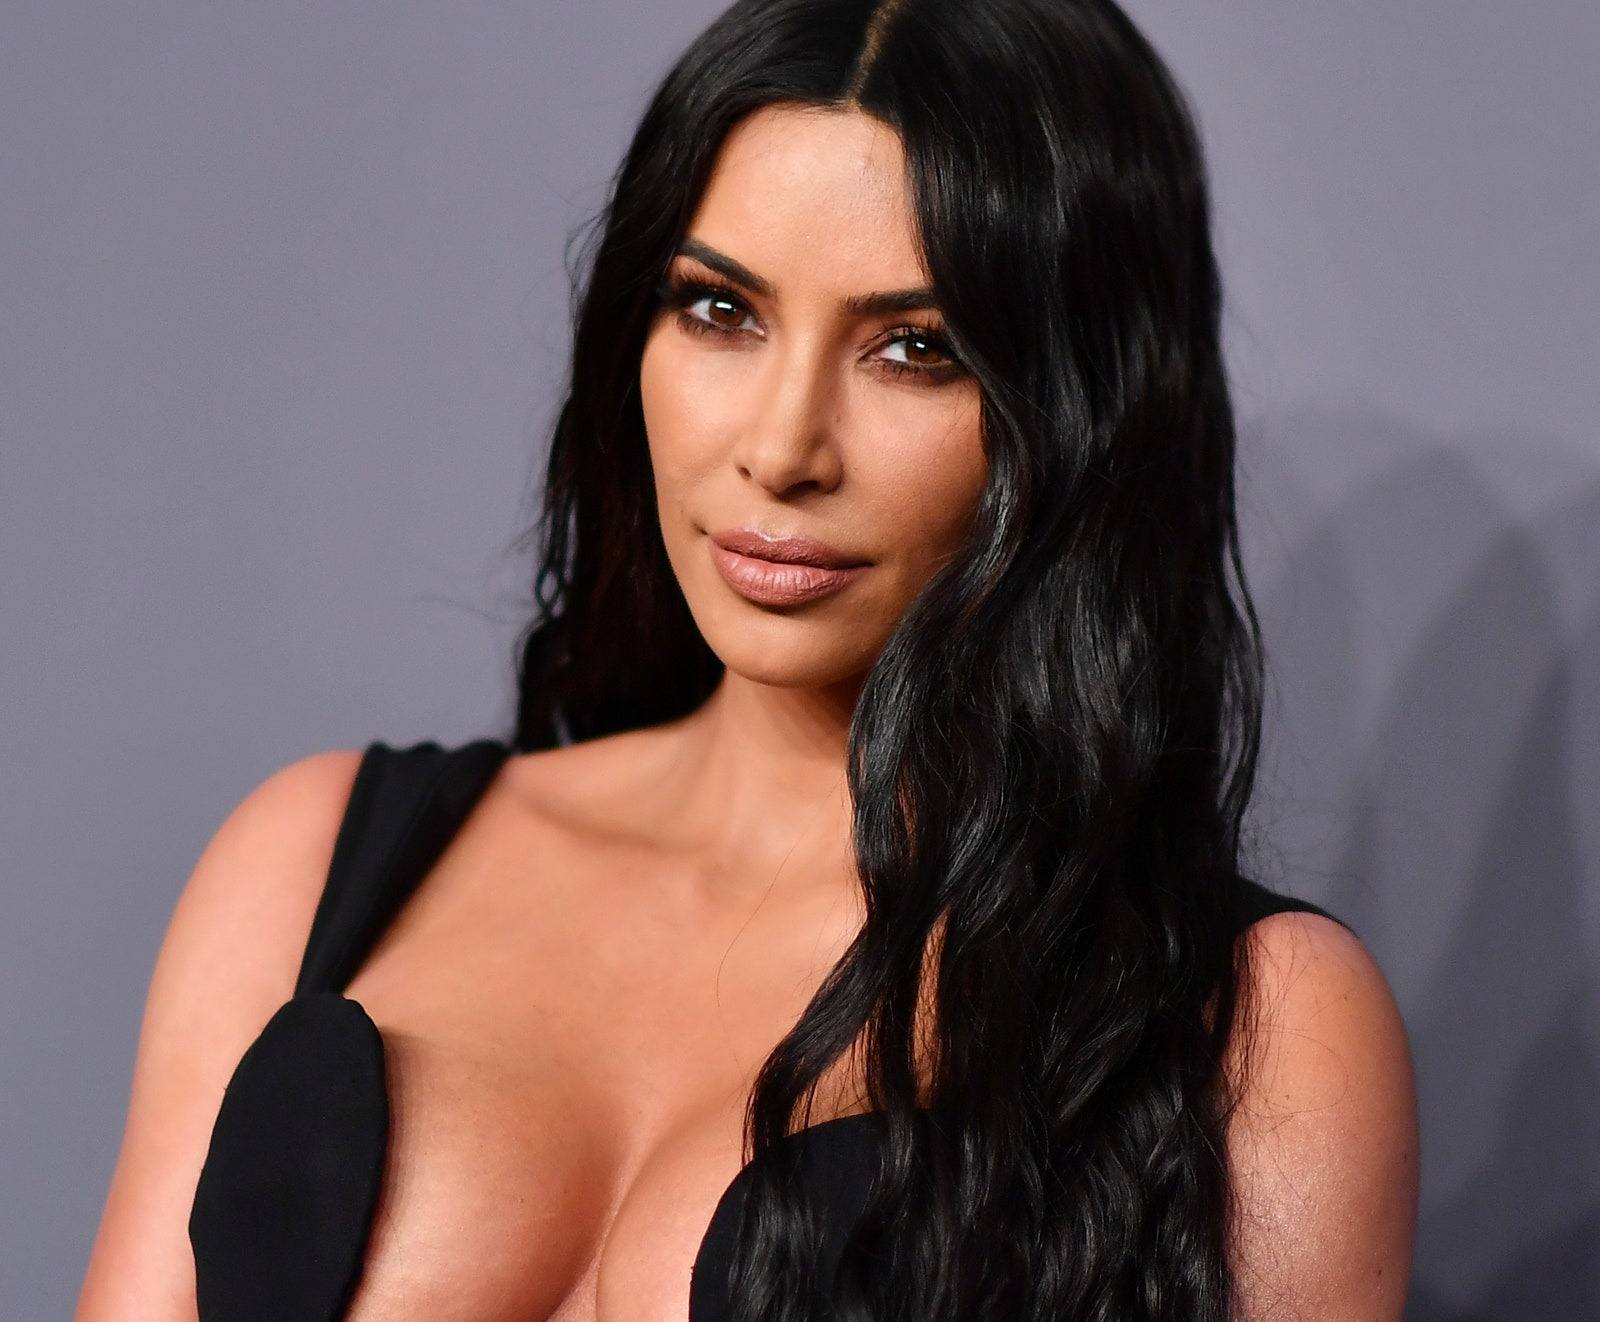 Kim Kardashian ja no vol ser advocada i ho torna a intentar com a actriu